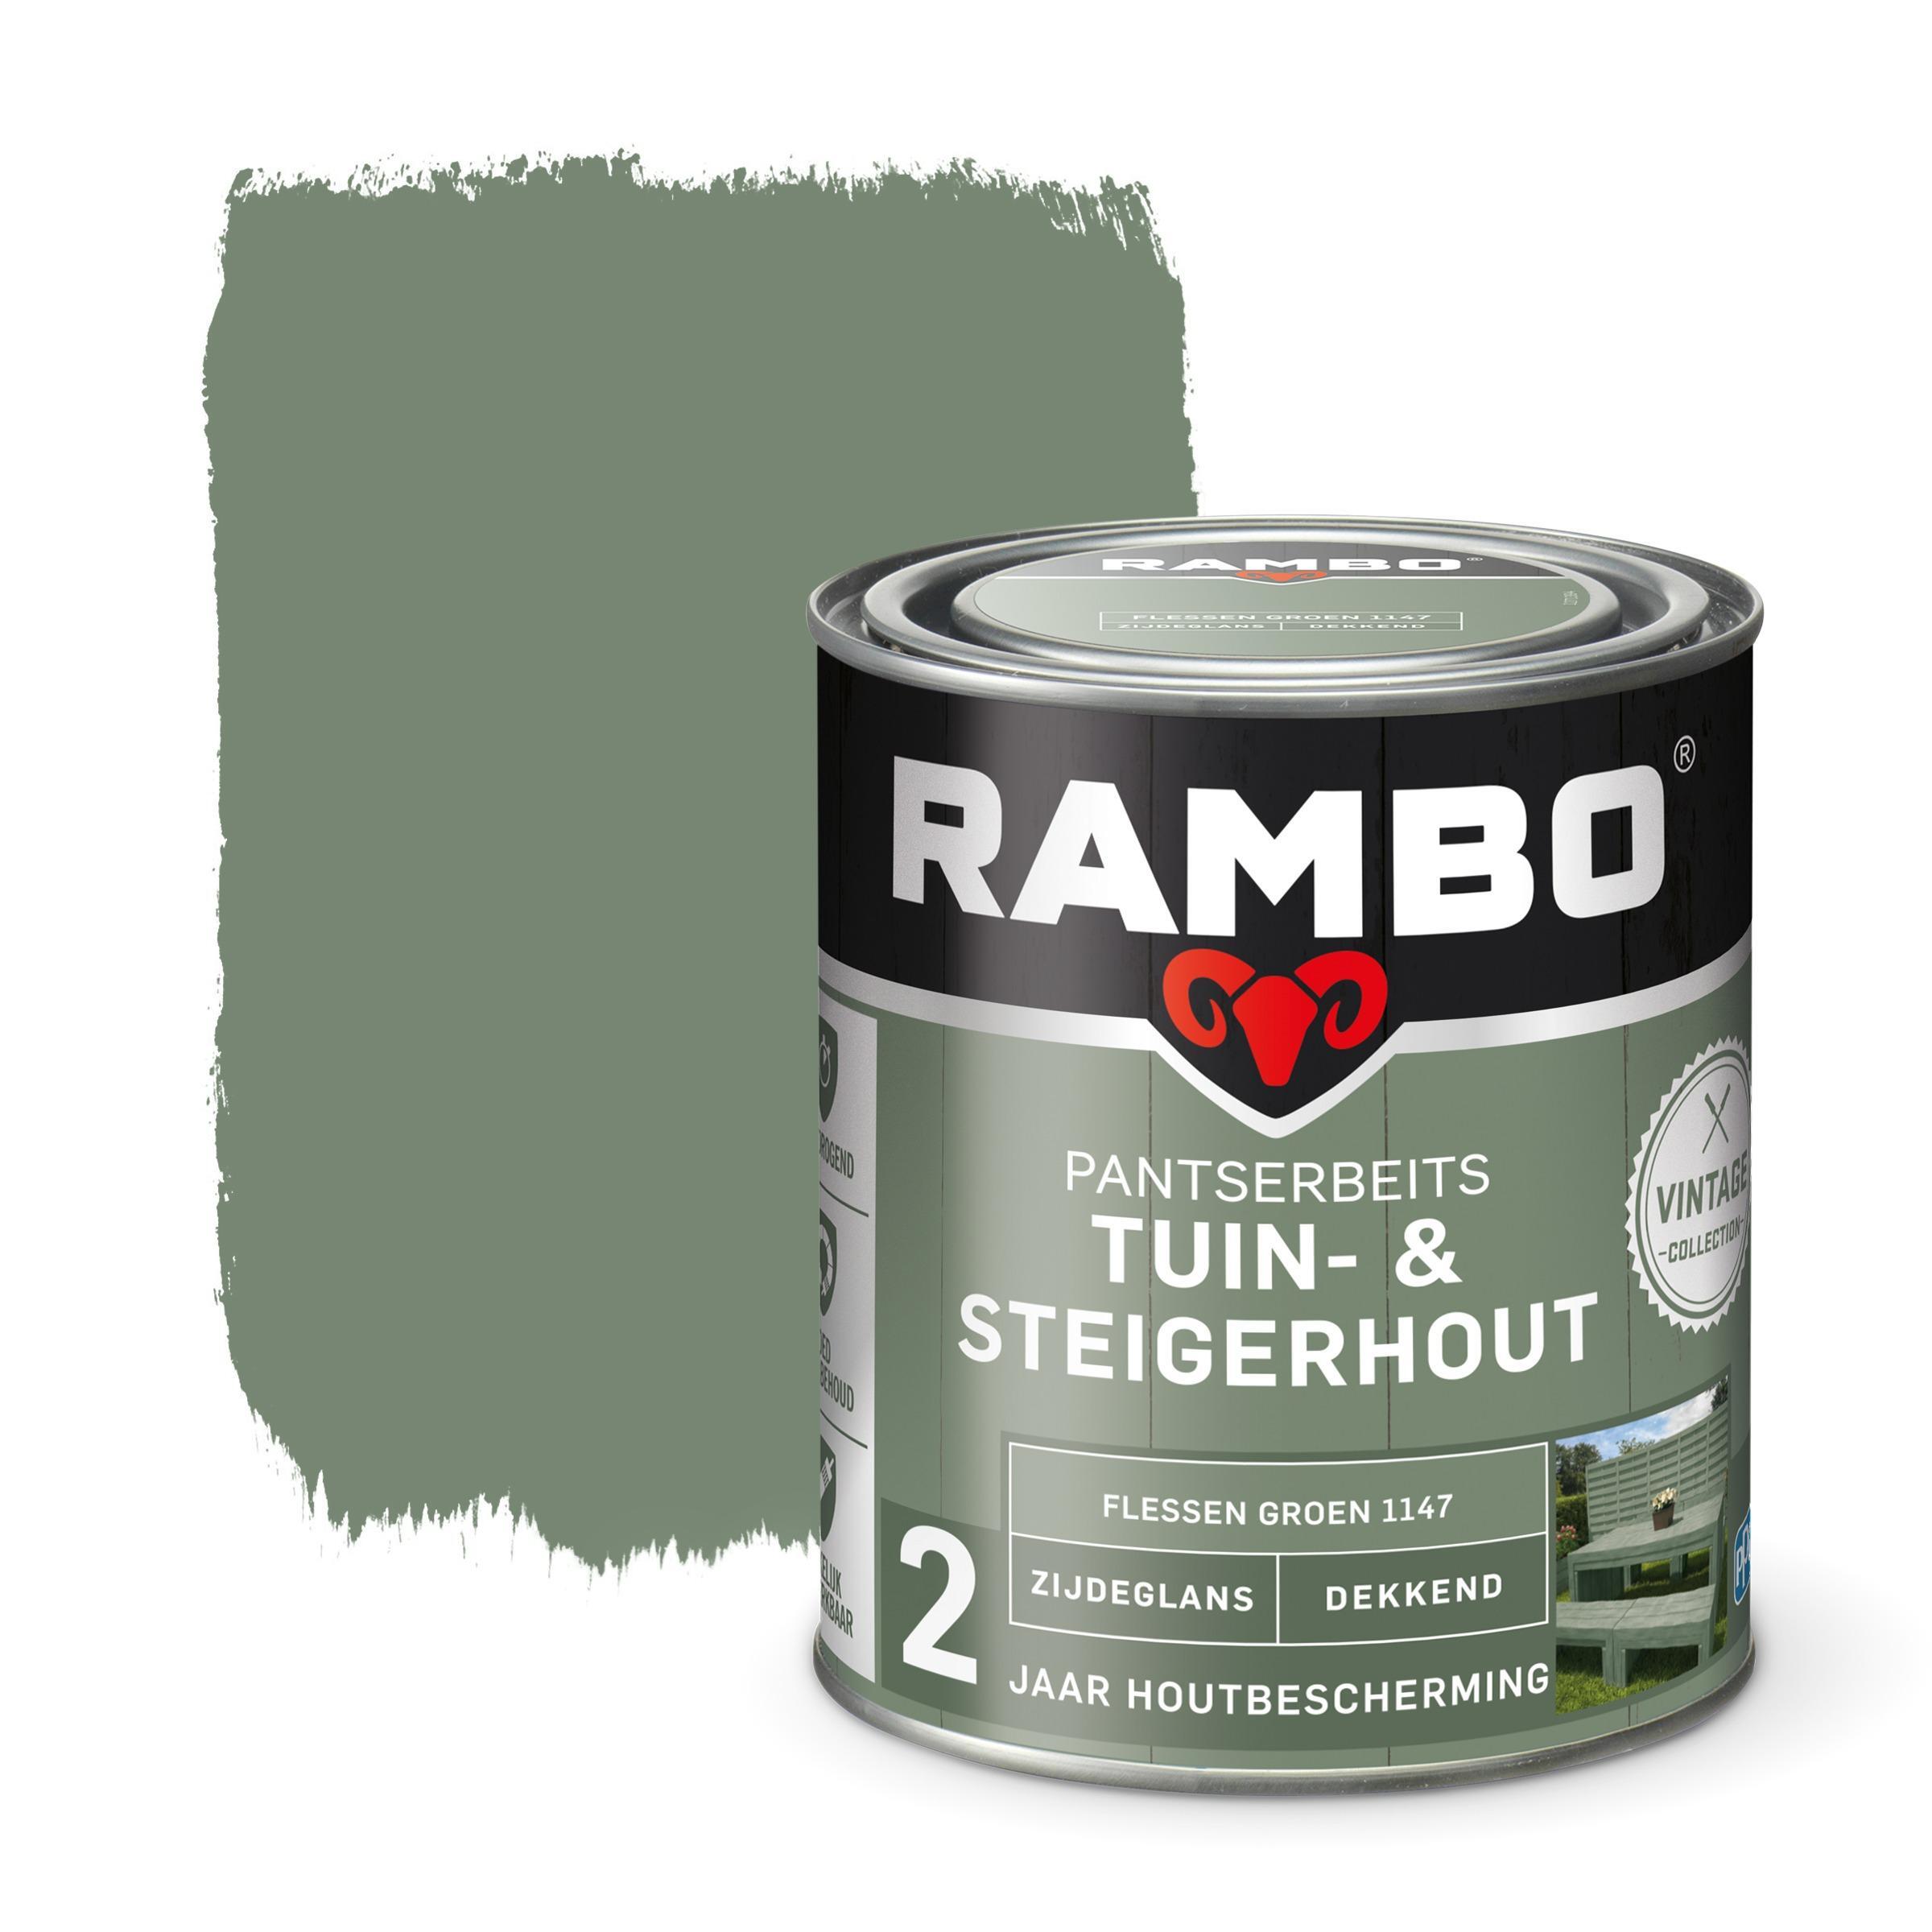 Rambo vintage pantserbeits tuin- en steigerhout dekkend flessen groen zijdeglans 750 ml